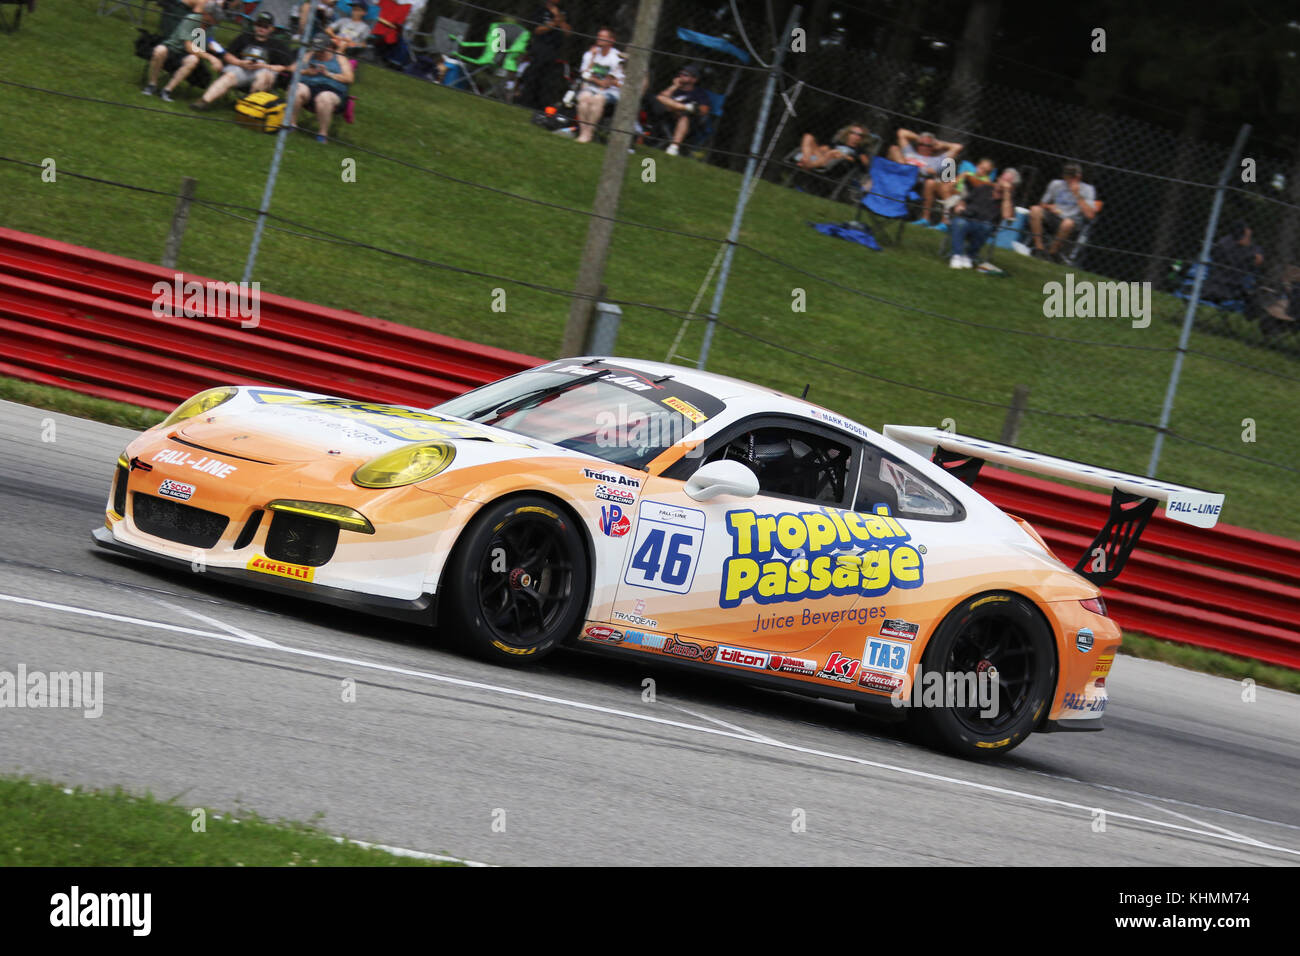 Auto 46. Porsche 911 GT3 Cup. Mark Boden, Treiber. Trans Am Serie Rennen. Mid-Ohio Sports Car Course. Lexington, Mansfield, Ohio, USA. Stockfoto